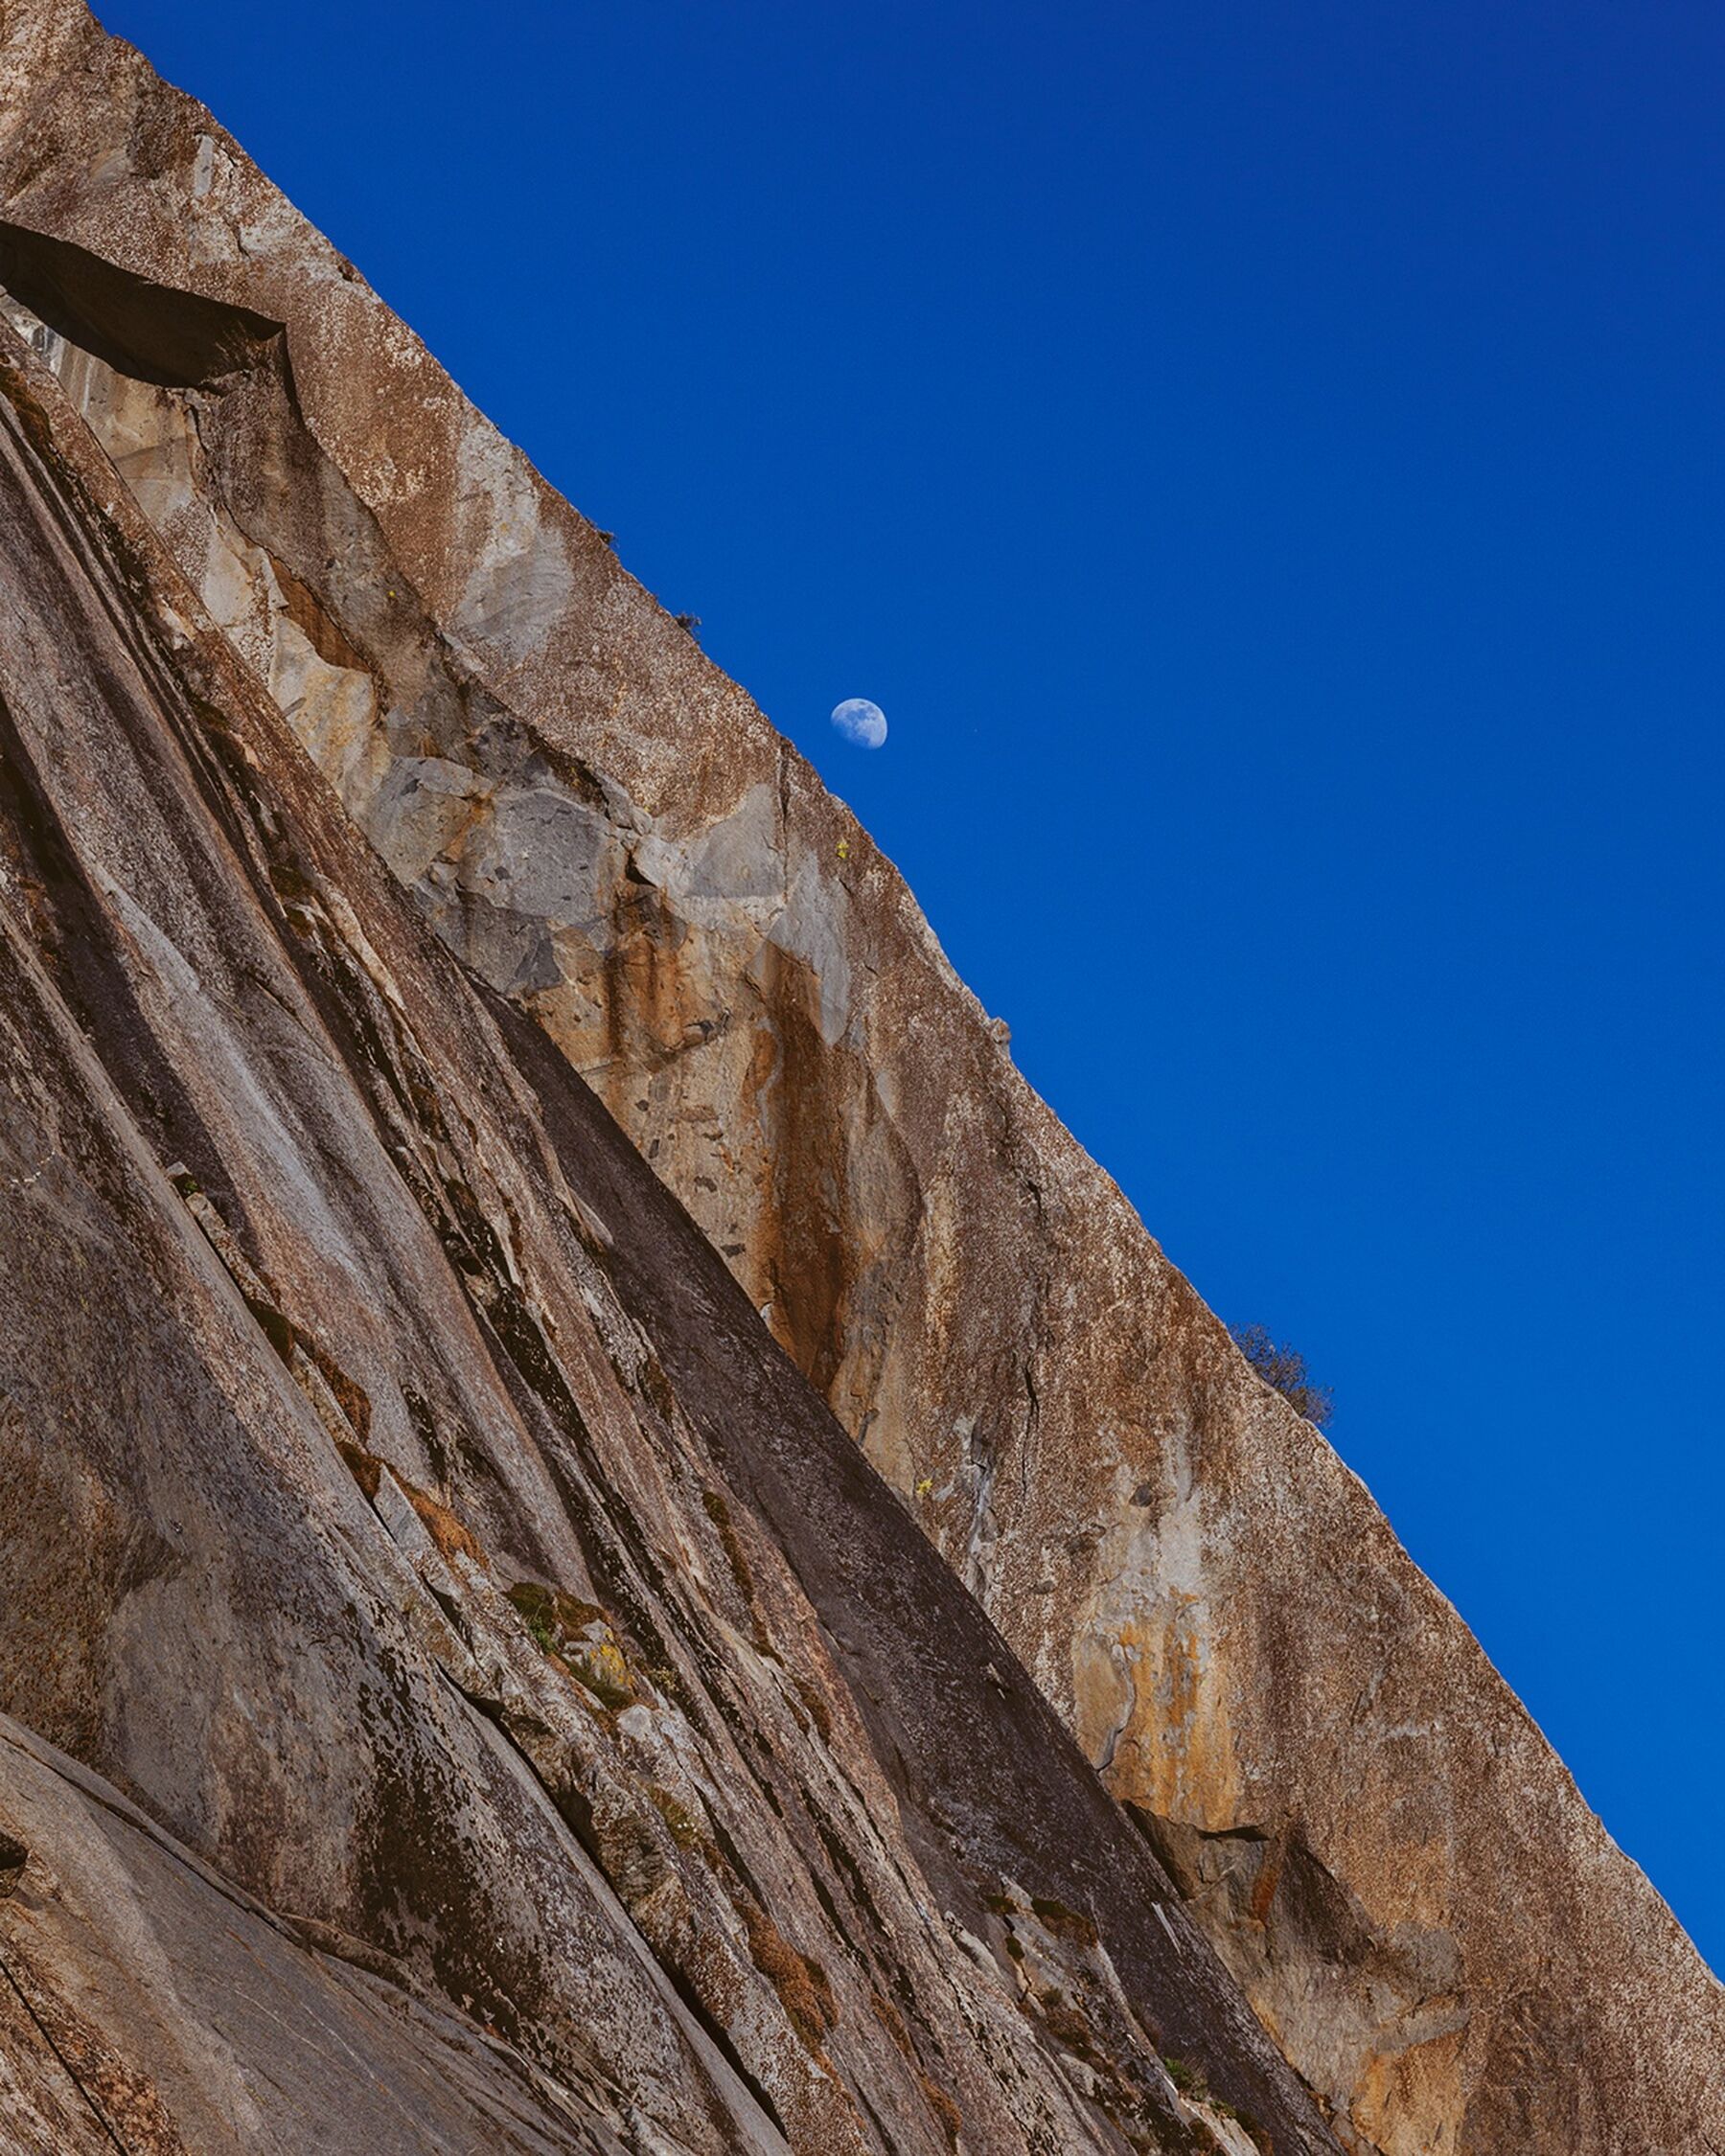 The moon rising over the granite slabs of Yosemite National Park, California